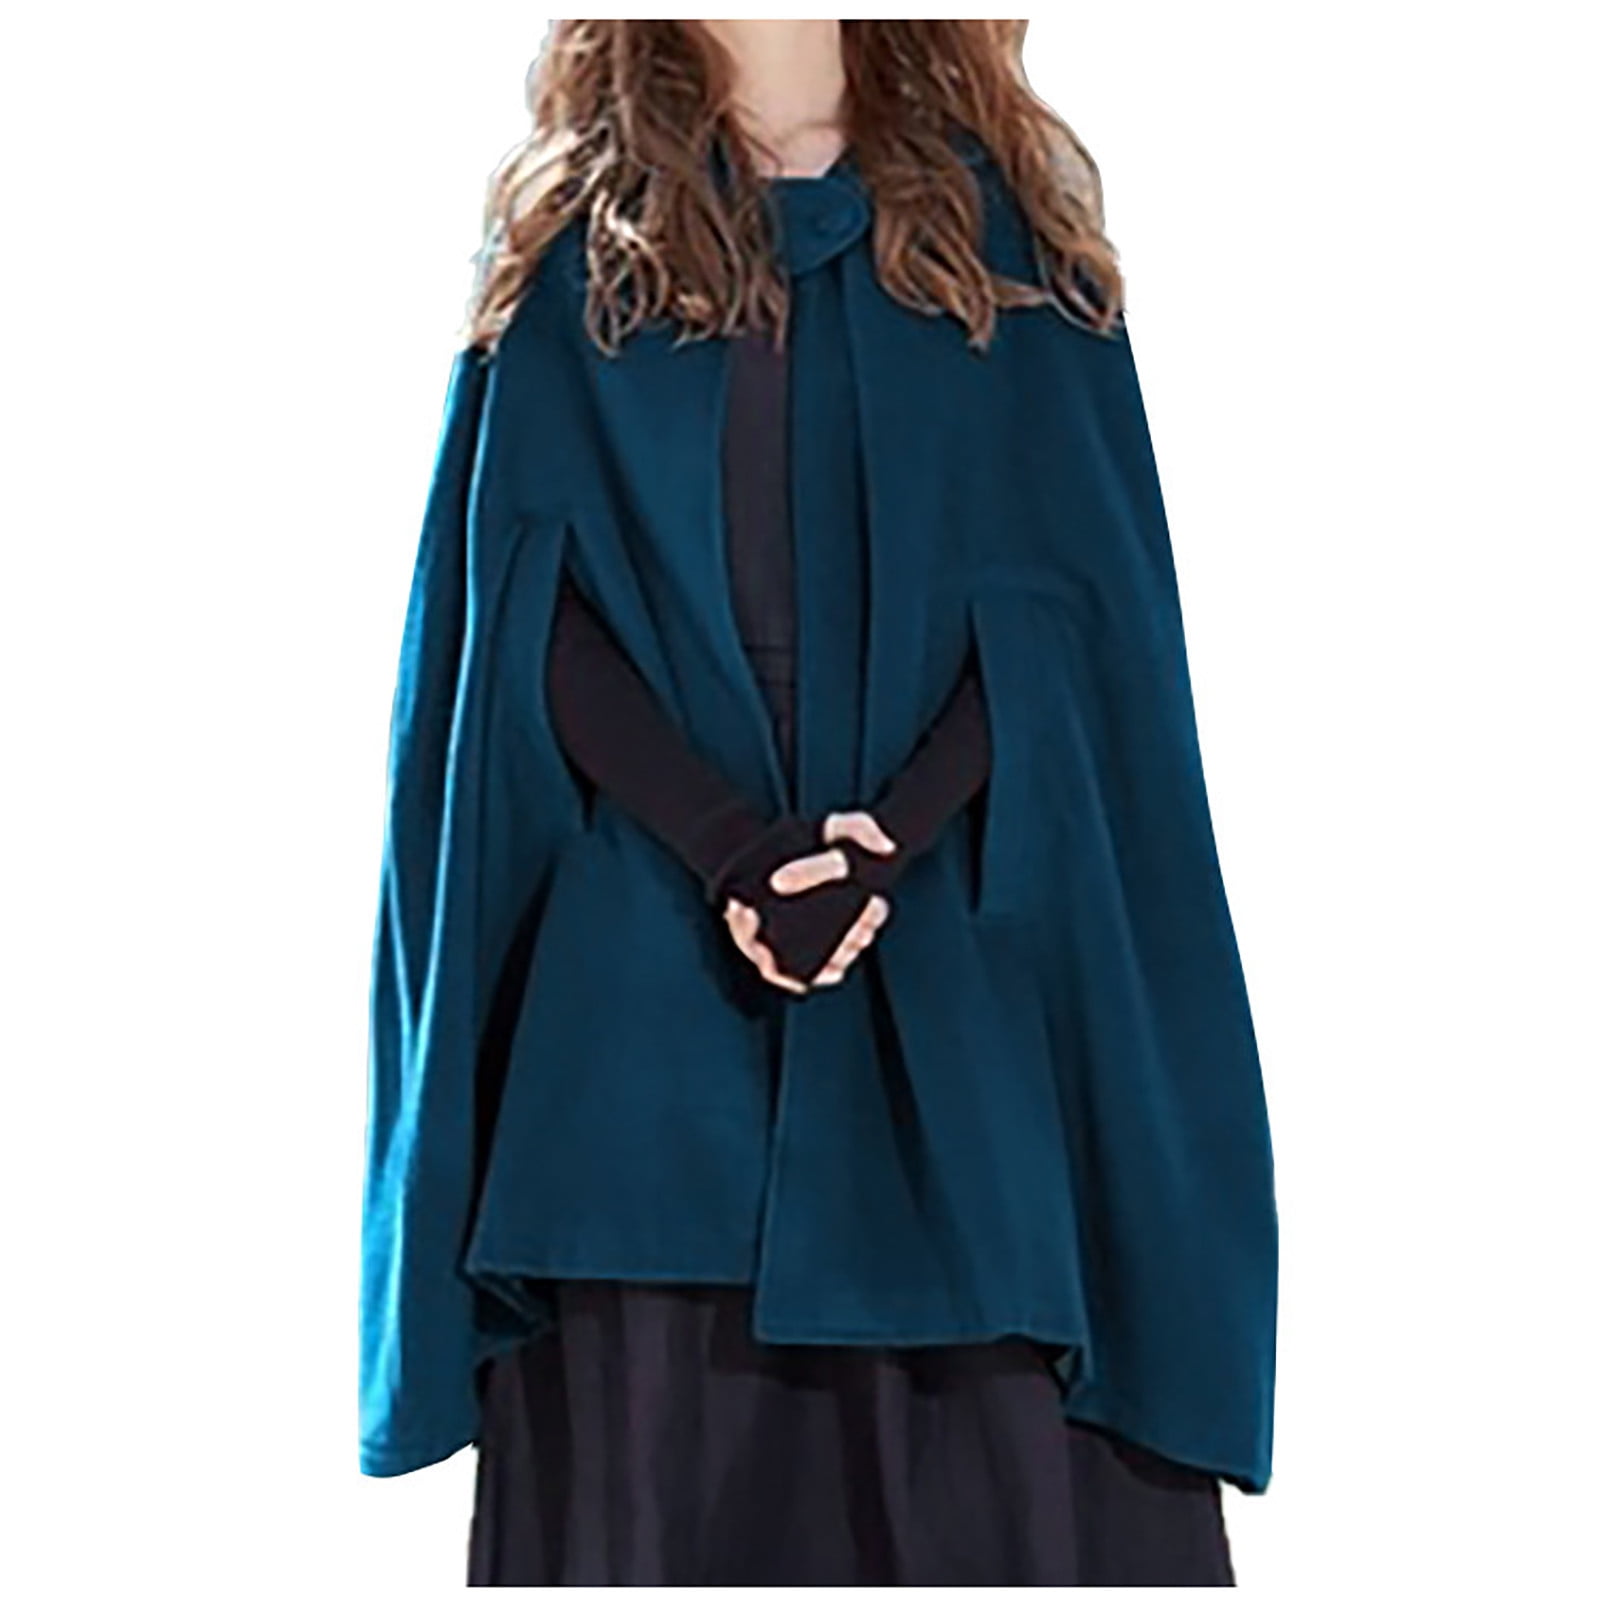 AKOEE Cloak for Women with Hood Batwing Sleeve Shawl Wool Blend Hooded Cape Poncho Mid-Length Cloak Coat Jacket, Women's, Size: XL, Black